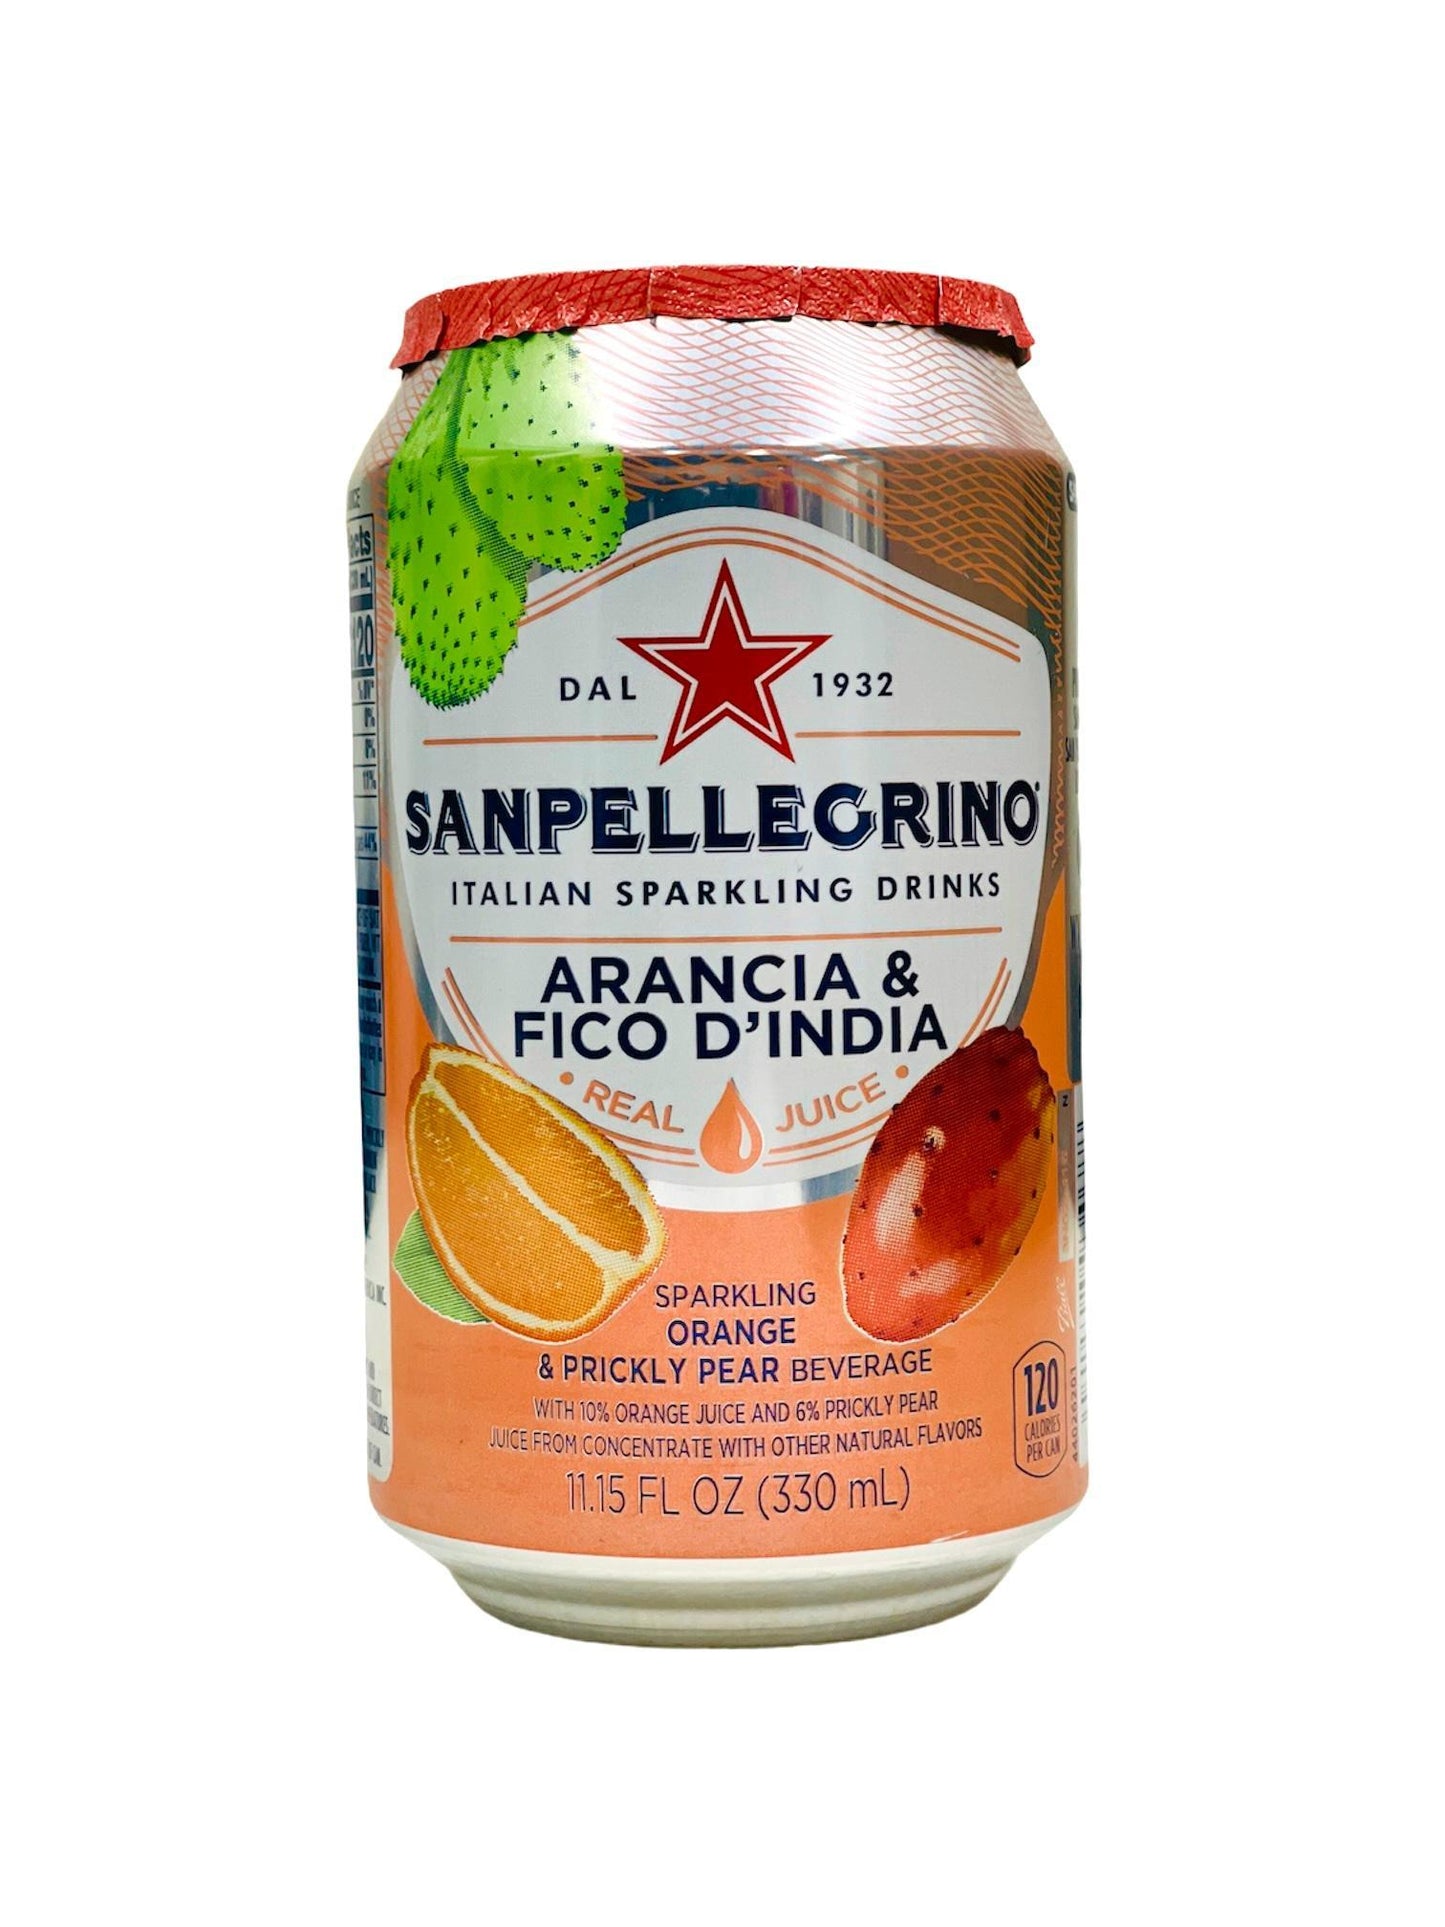 Sanpellegrino Arancia & Fico d'India Can, 11.15 fl oz